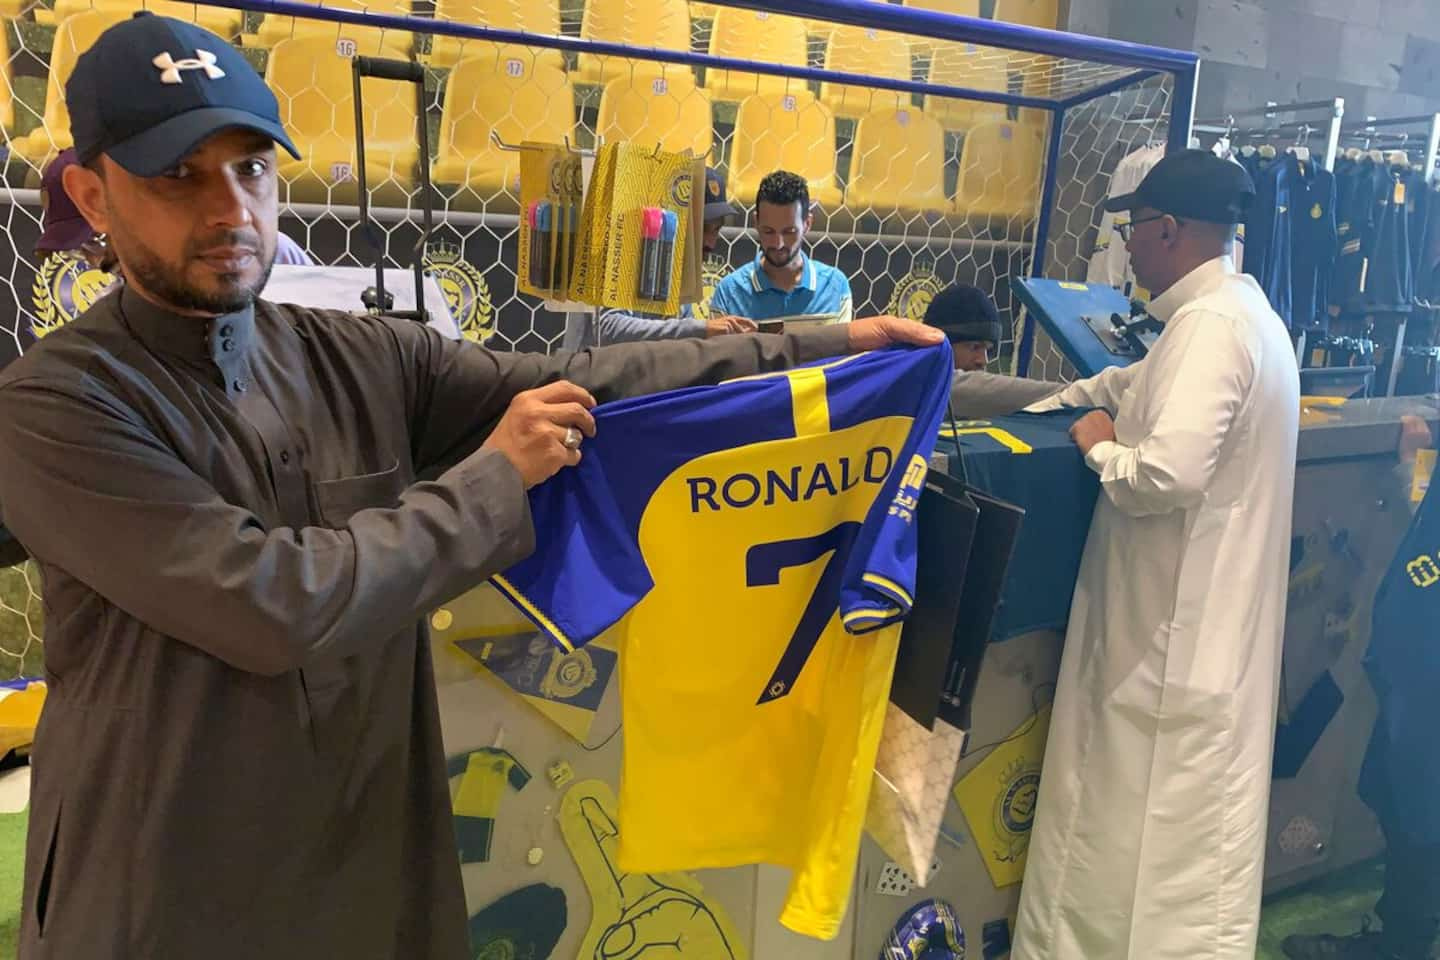 In Saudi Arabia, the "Ronaldomania" has begun